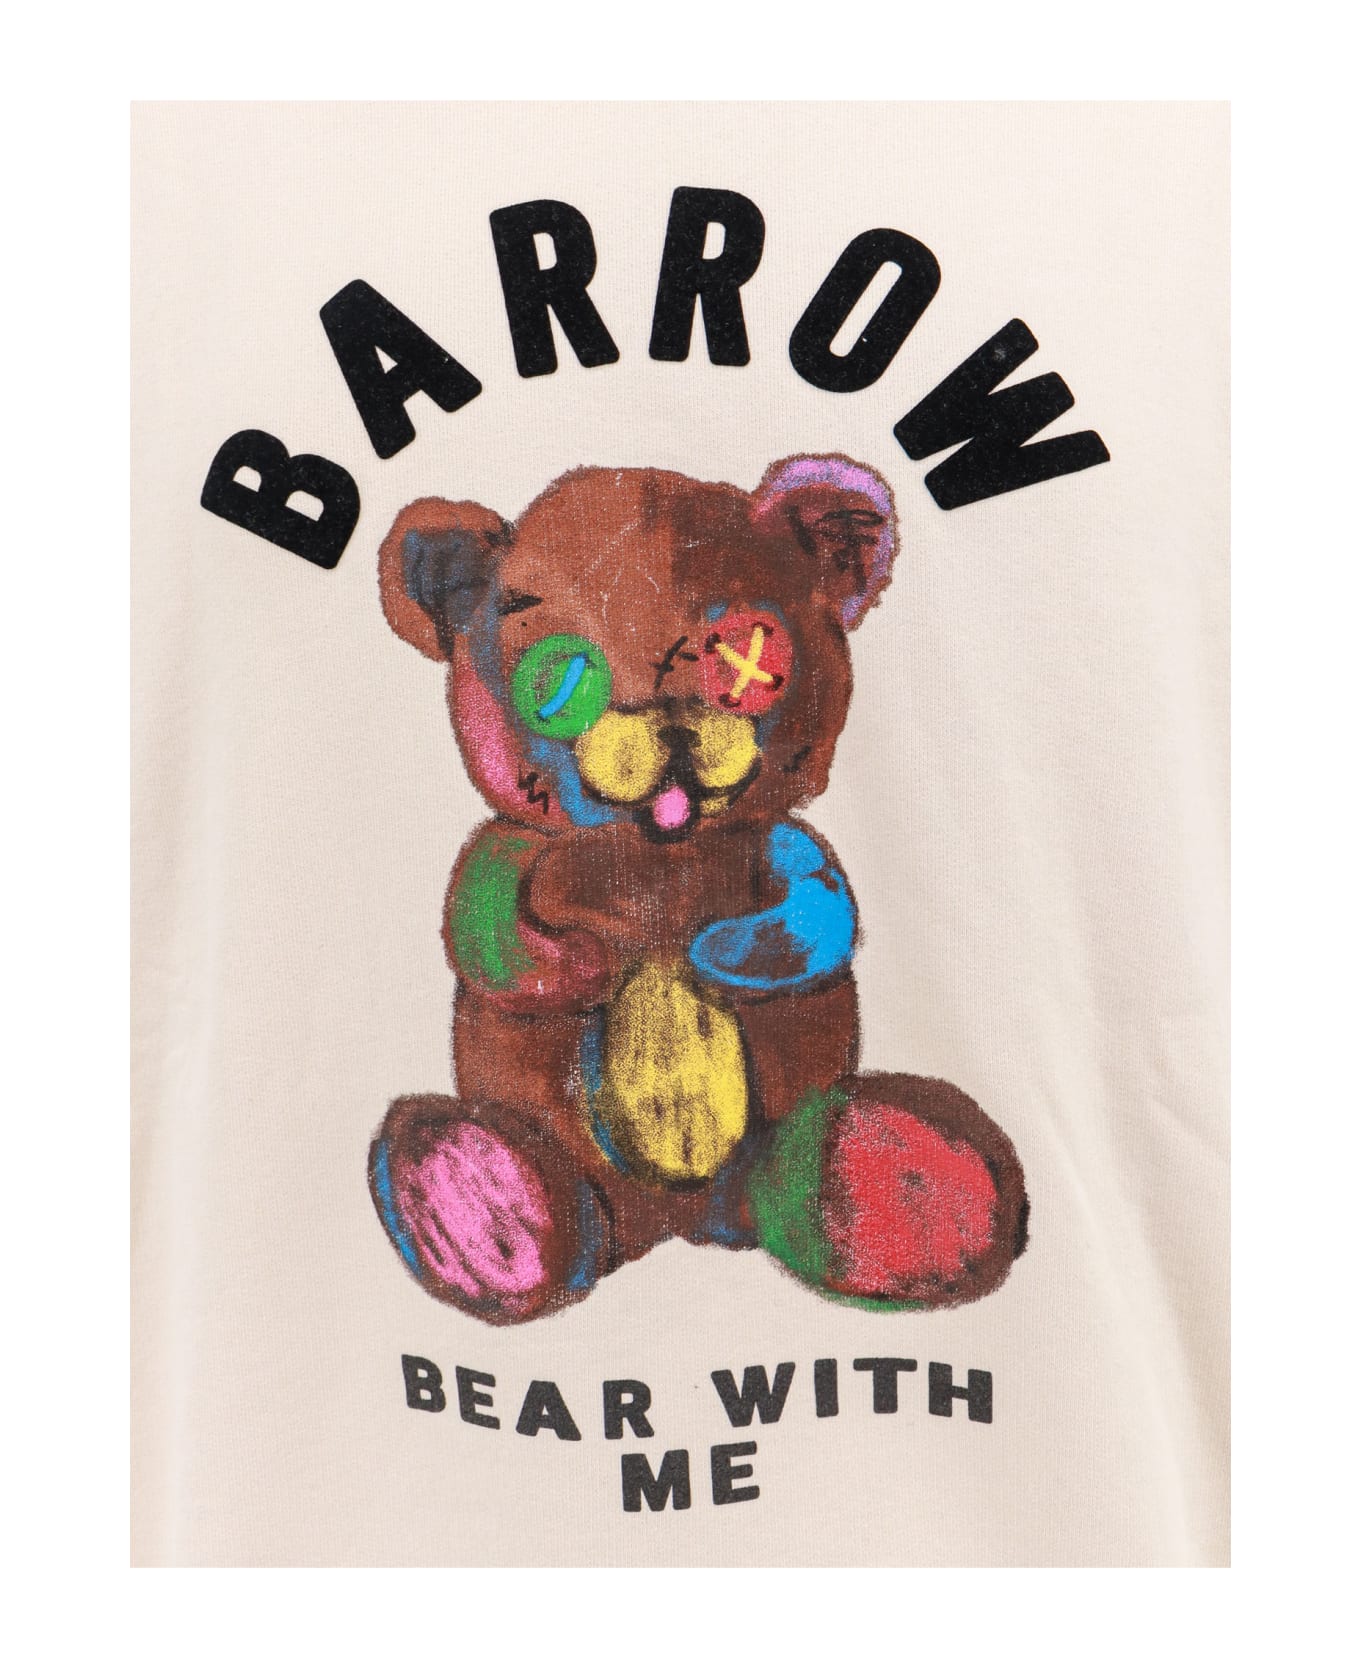 Barrow Sweatshirt - MultiColour フリース